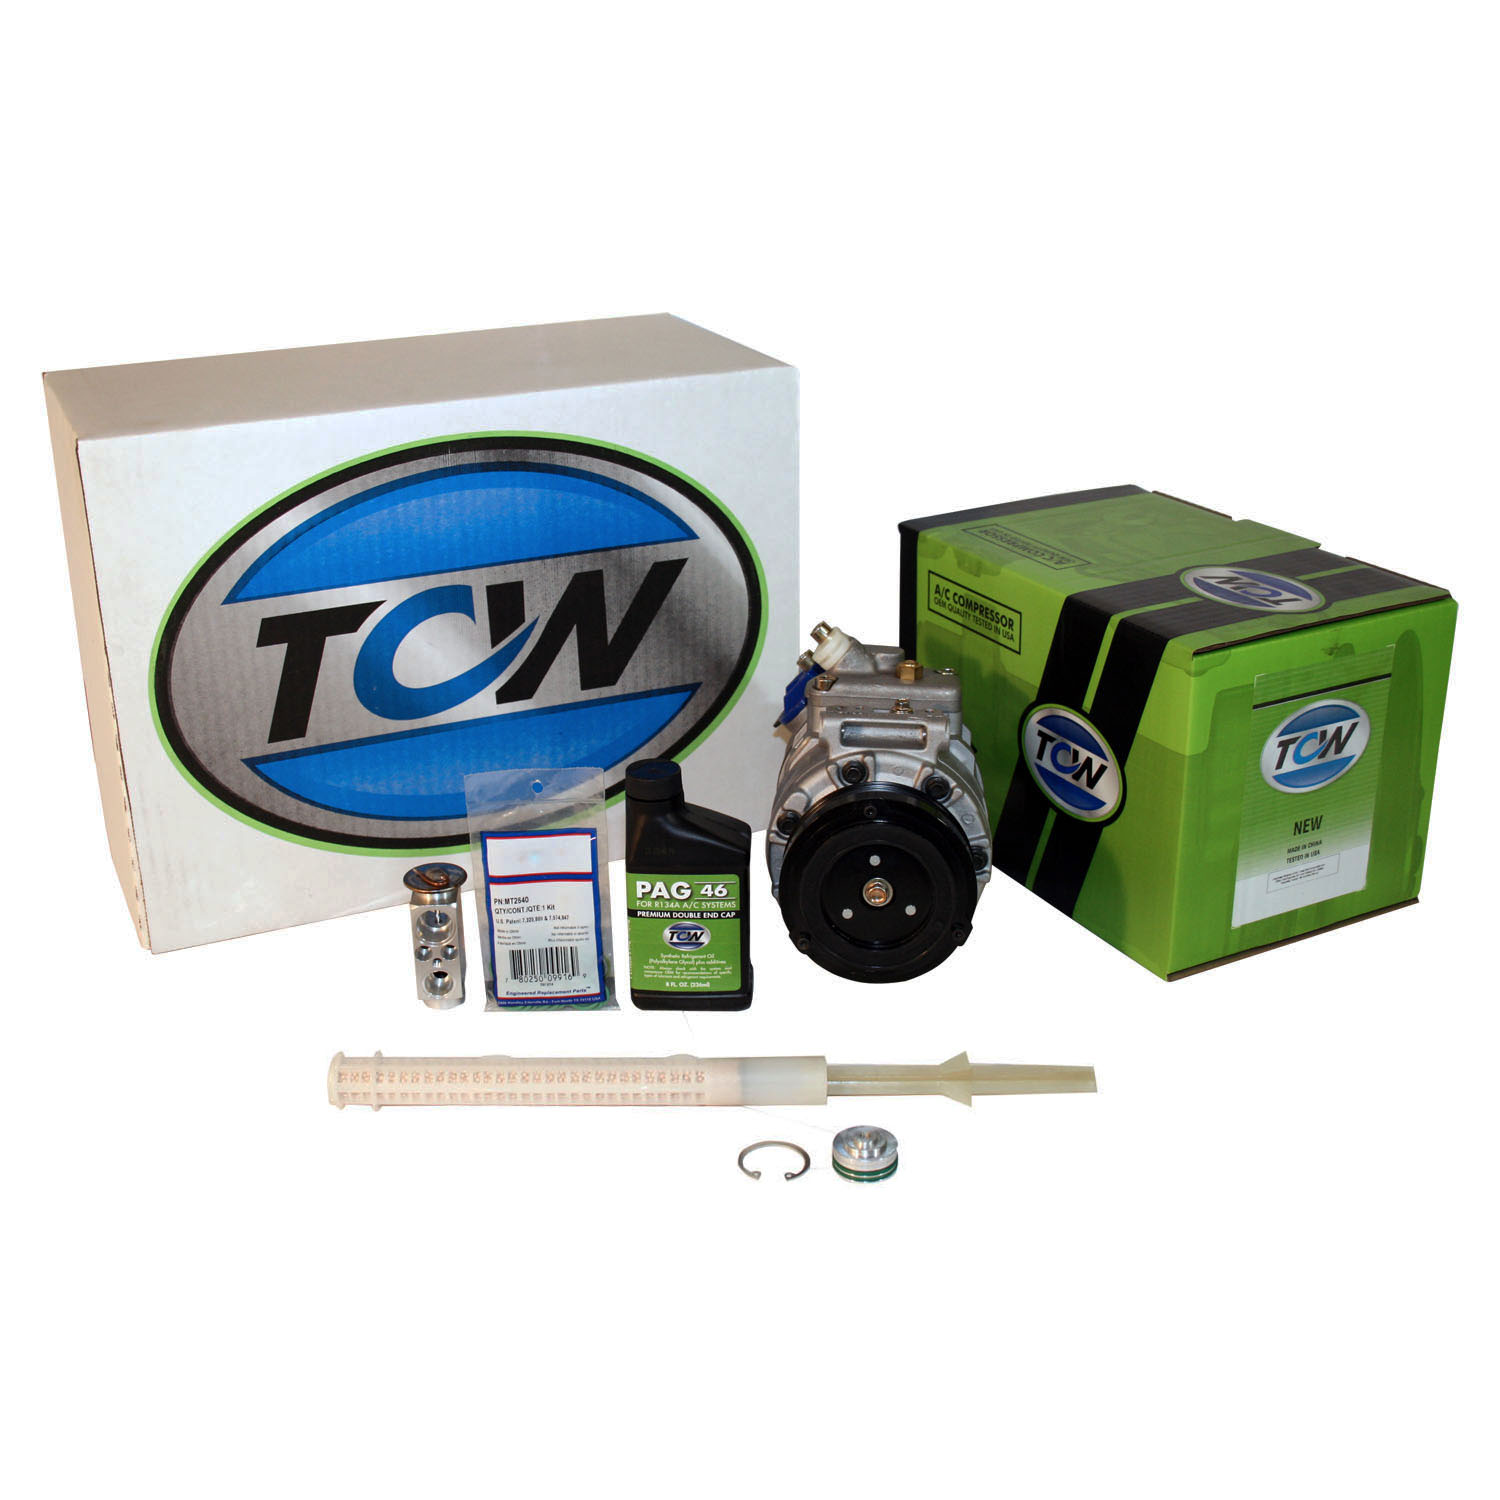 TCW Vehicle A/C Kit K1000433N New Product Image field_60b6a13a6e67c